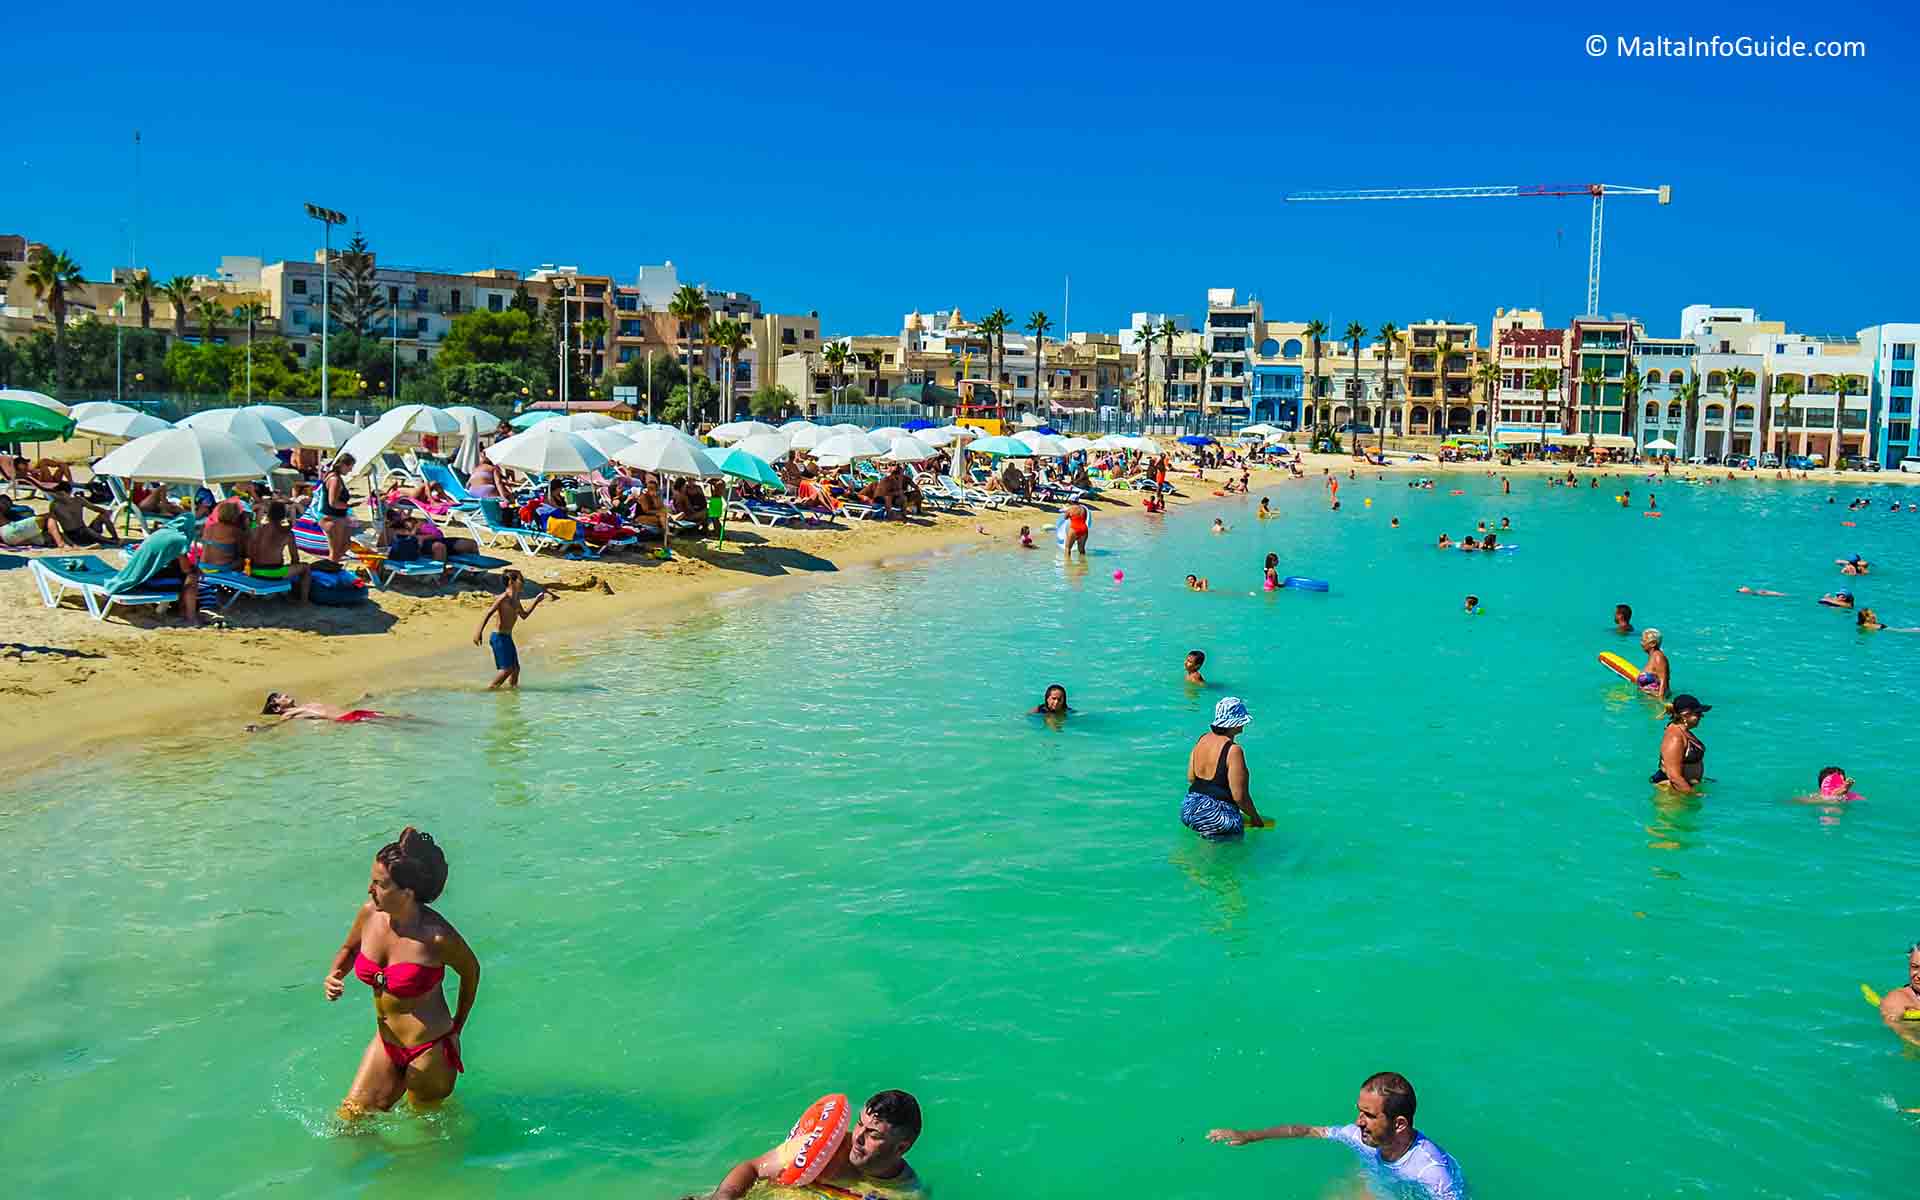 People swimming and sunbathing at Pretty Bay Malta.